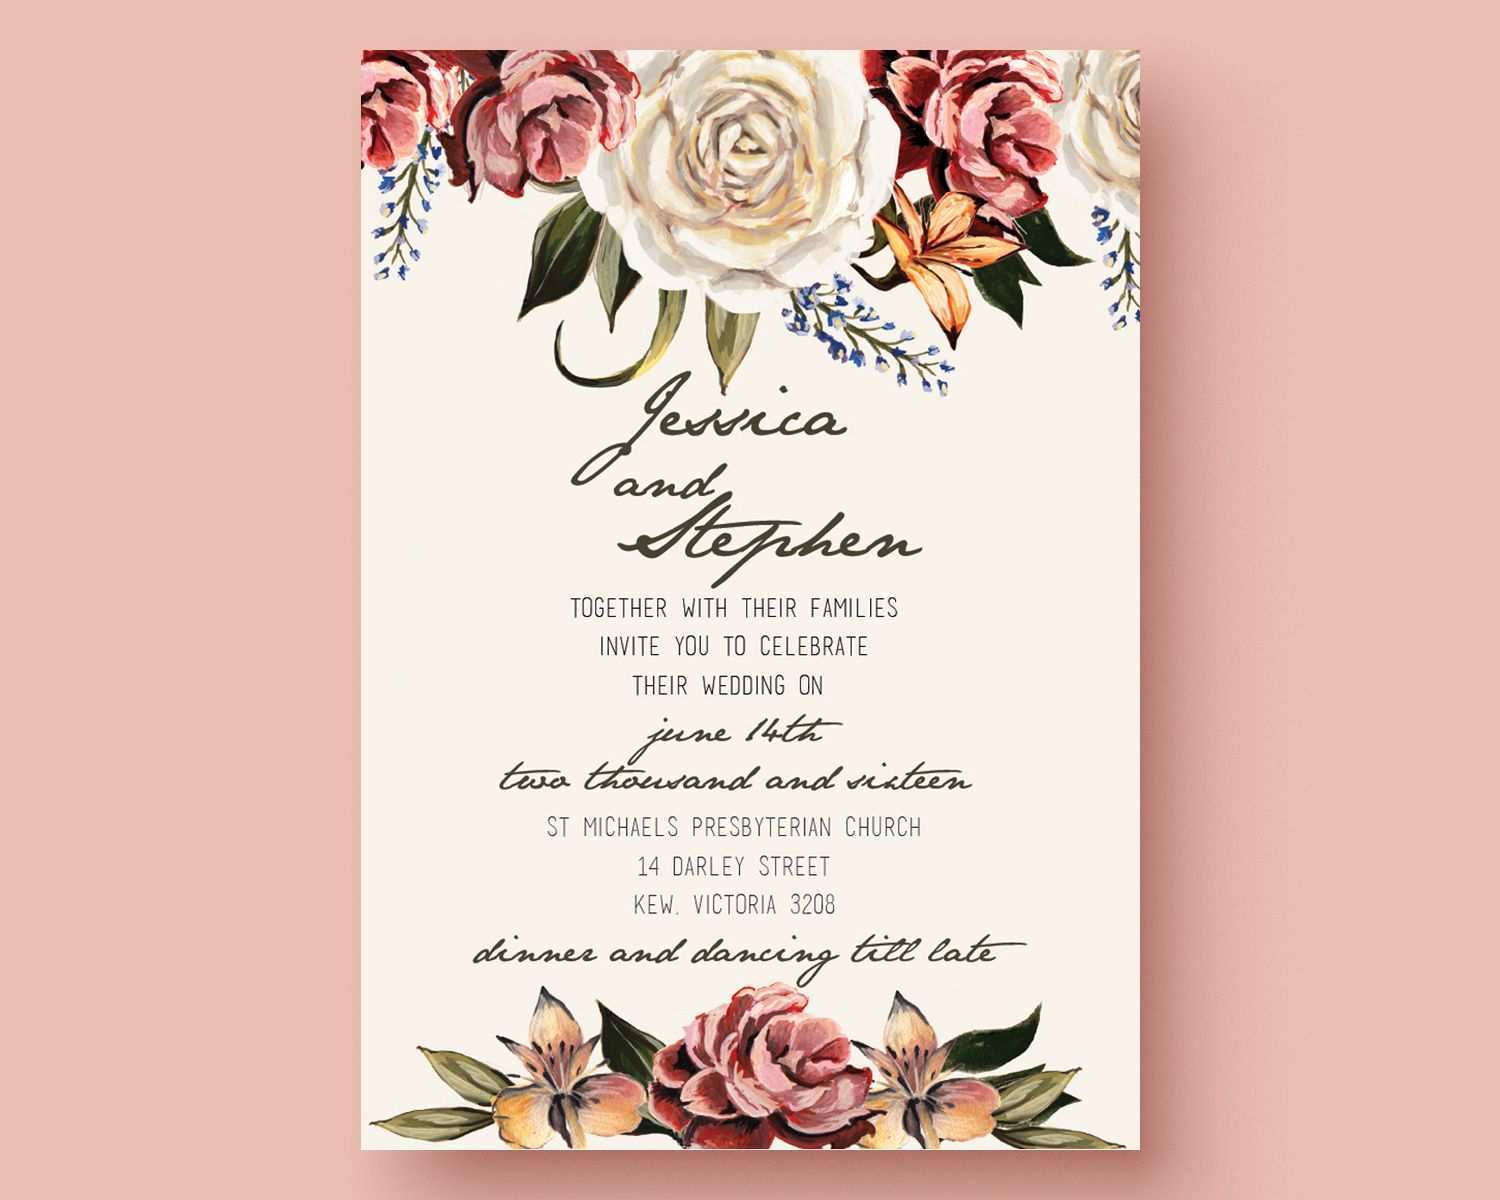 72 Format Adobe Illustrator Wedding Invitation Template Free For Ms Word By Adobe Illustrator Wedding Invitation Template Free Cards Design Templates